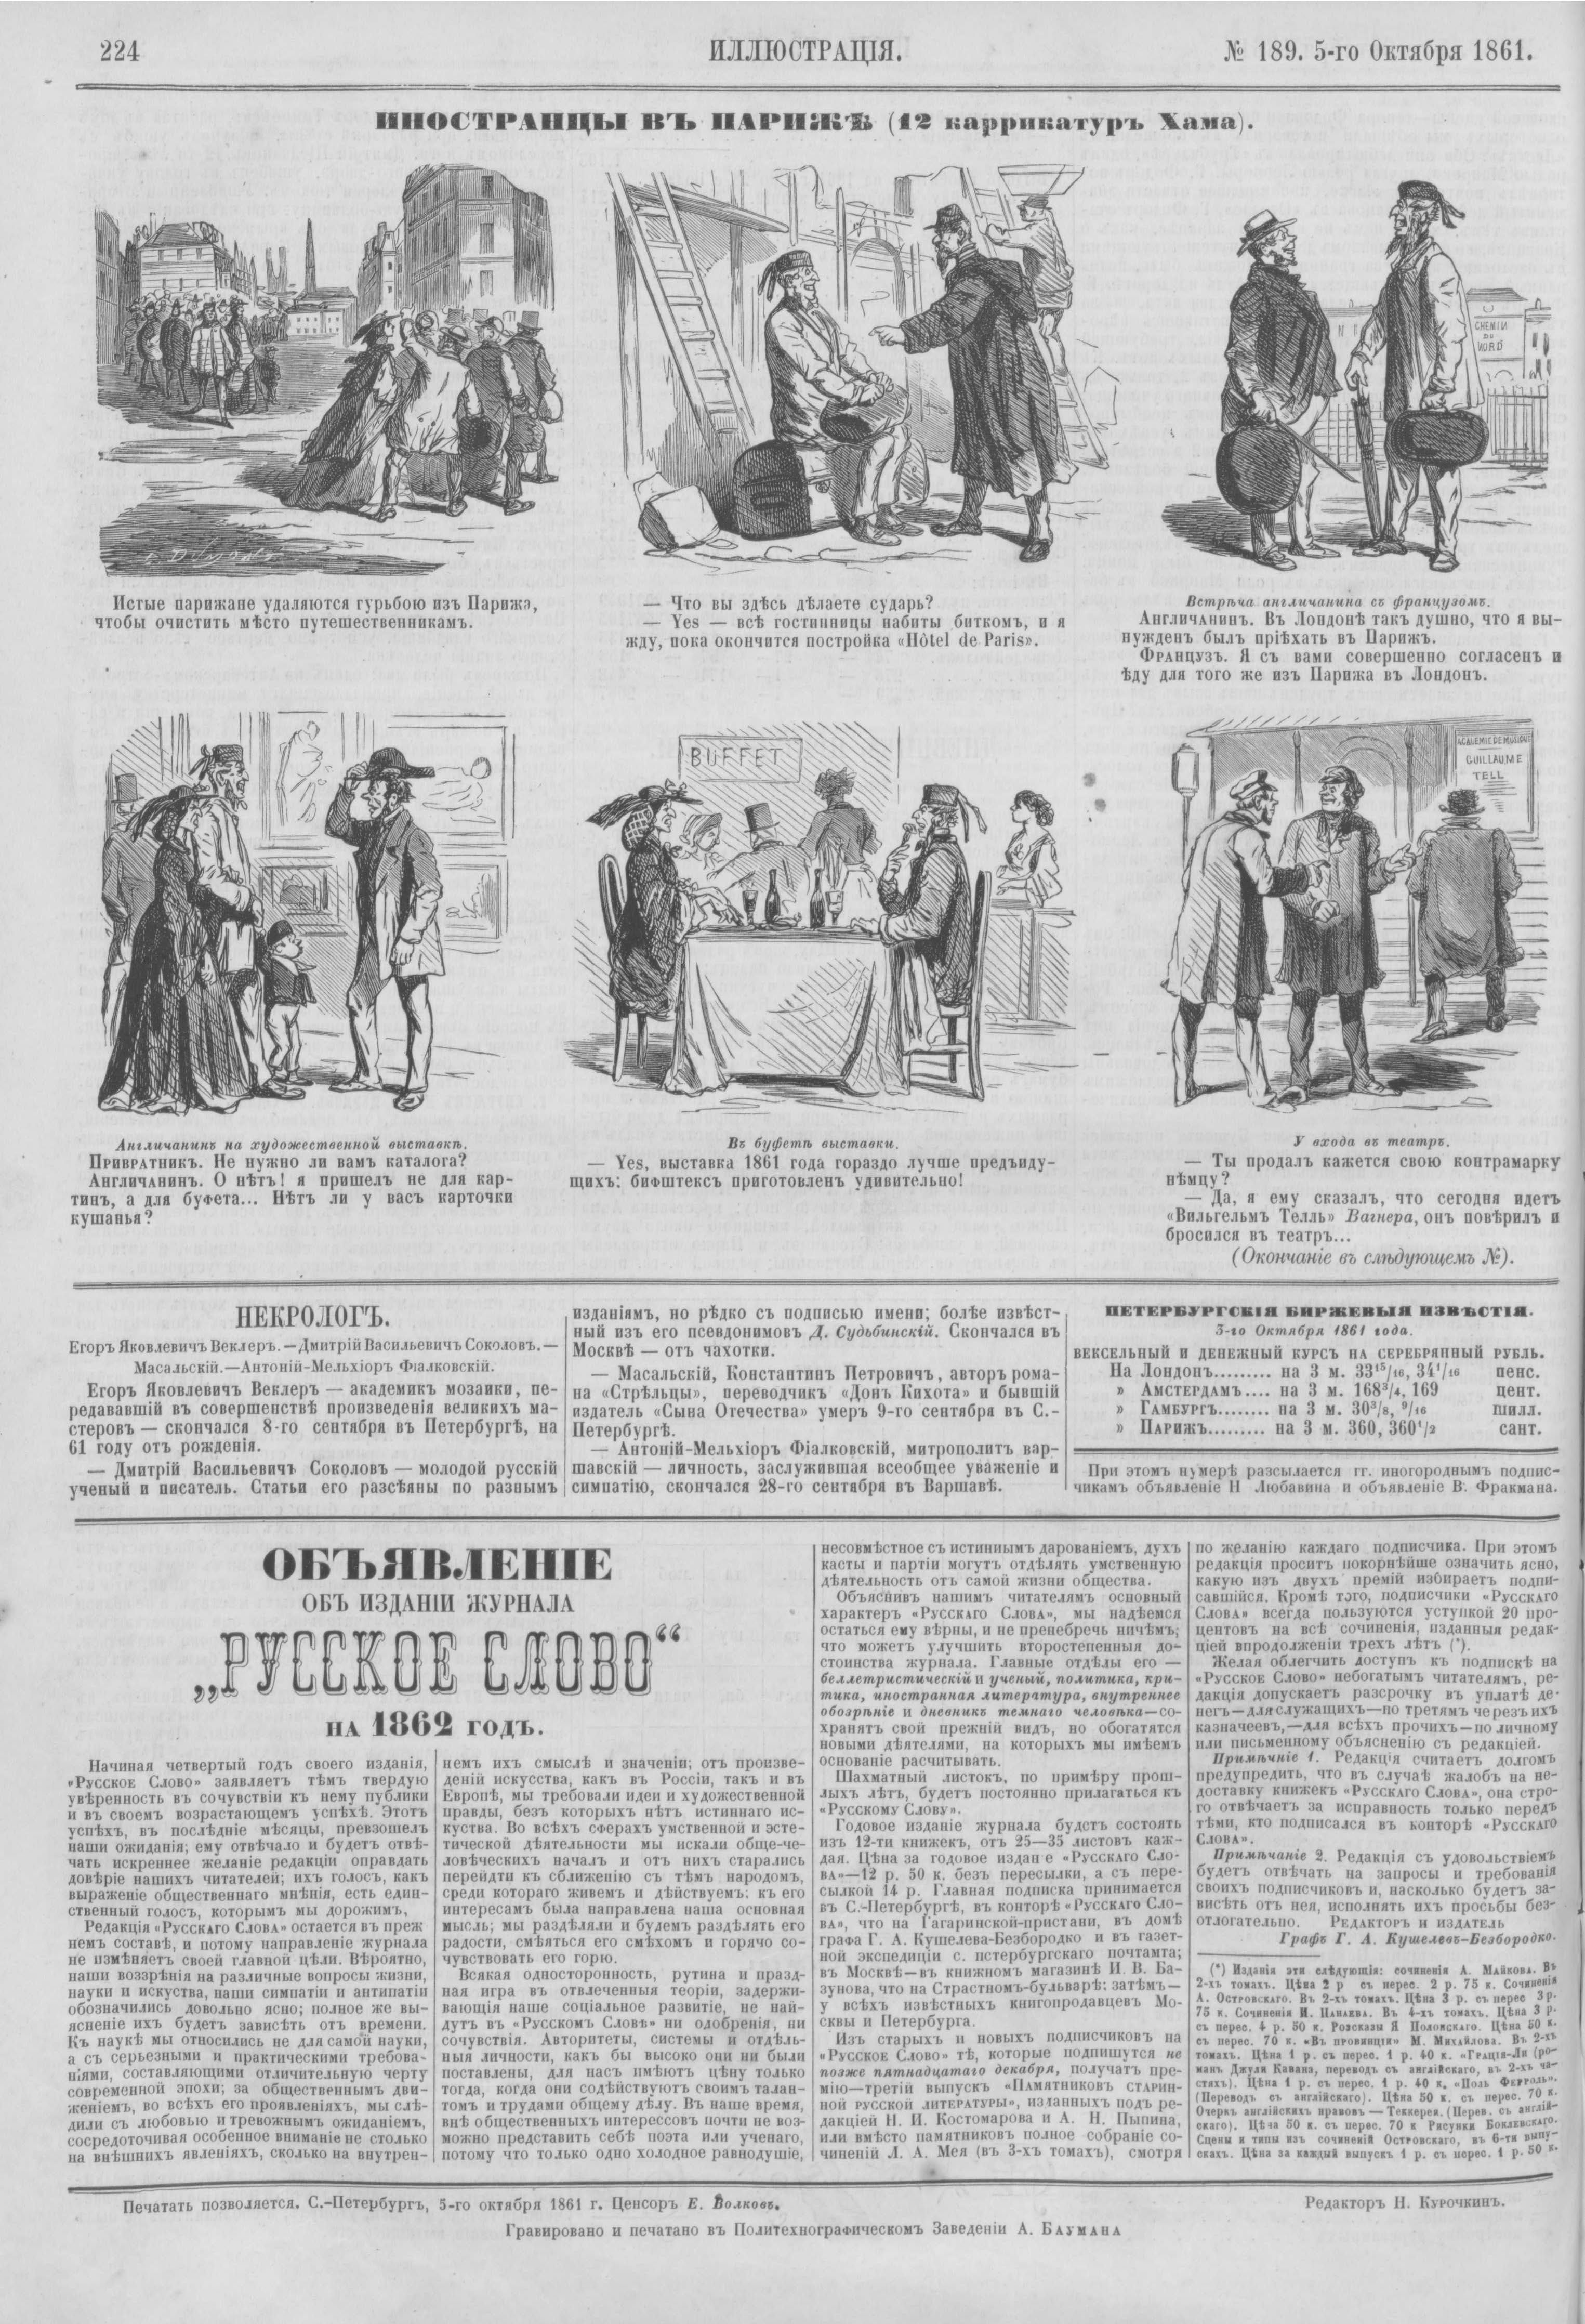 Cham. Иностранцы в Париже. Илл., 1861 №189, 5 окт. С. 224.jpg